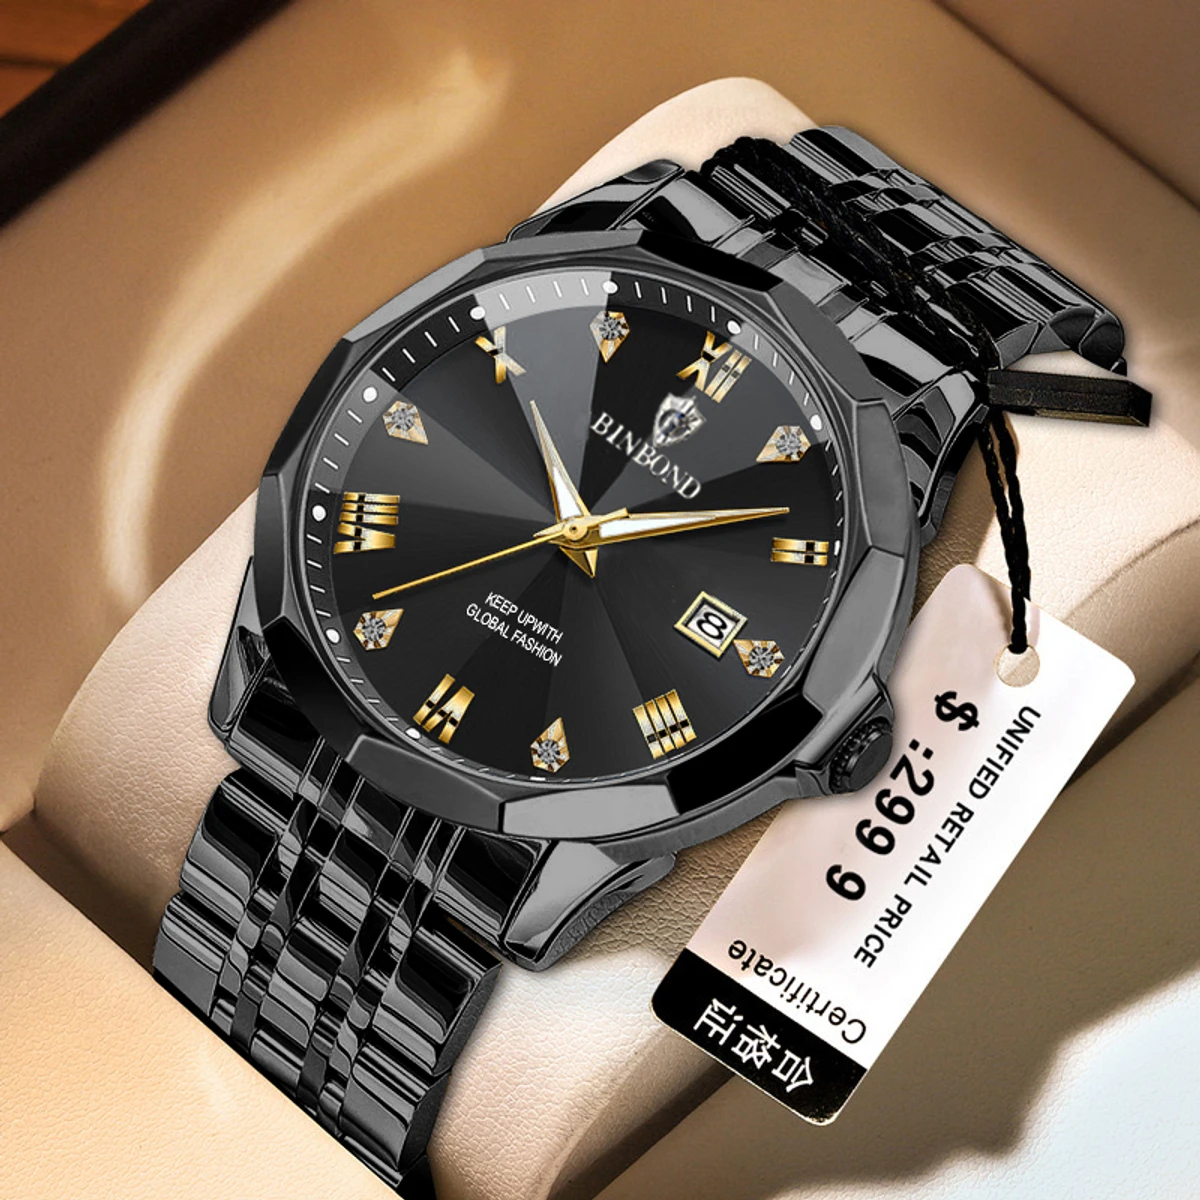 Binbond New Fashion Quartz Watch For Men Stainless Steel Waterproof Luminous Date Mens Watches Top Brand Luxury Clock- Black